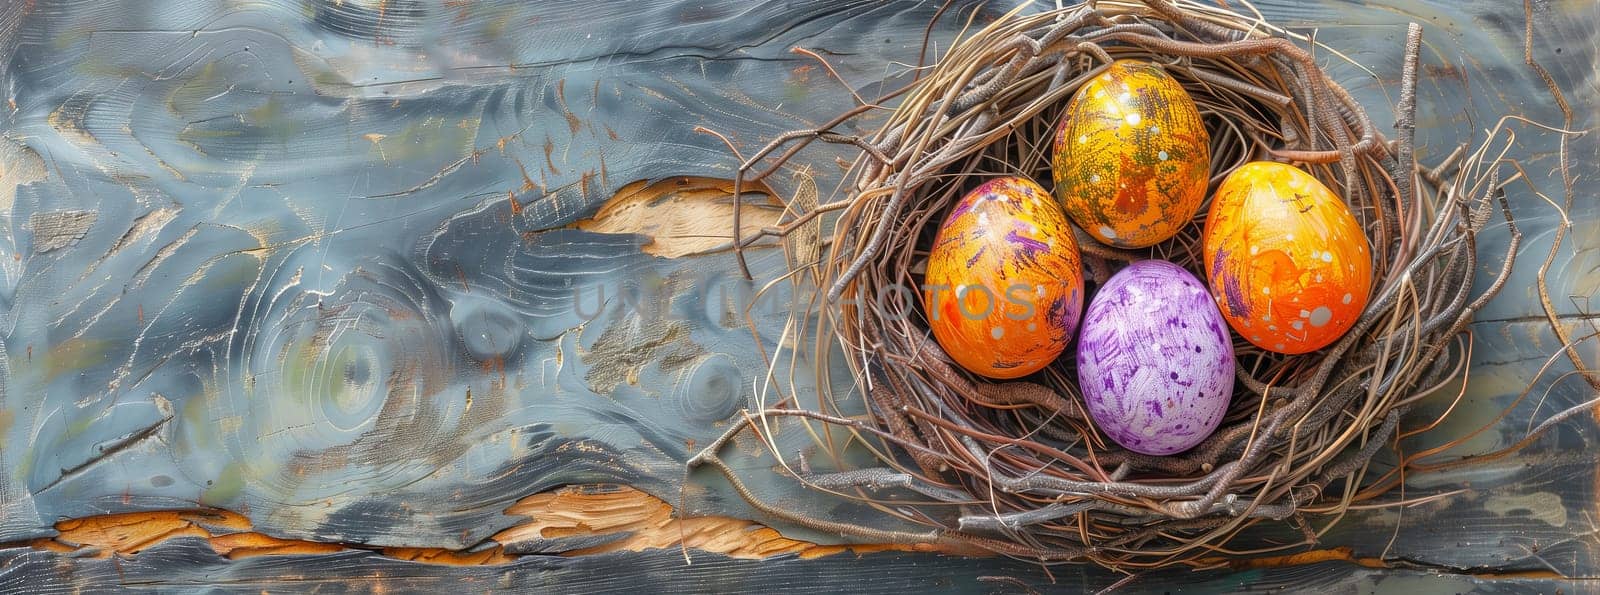 Three Easter eggs hidden in bird nest on wooden table by richwolf